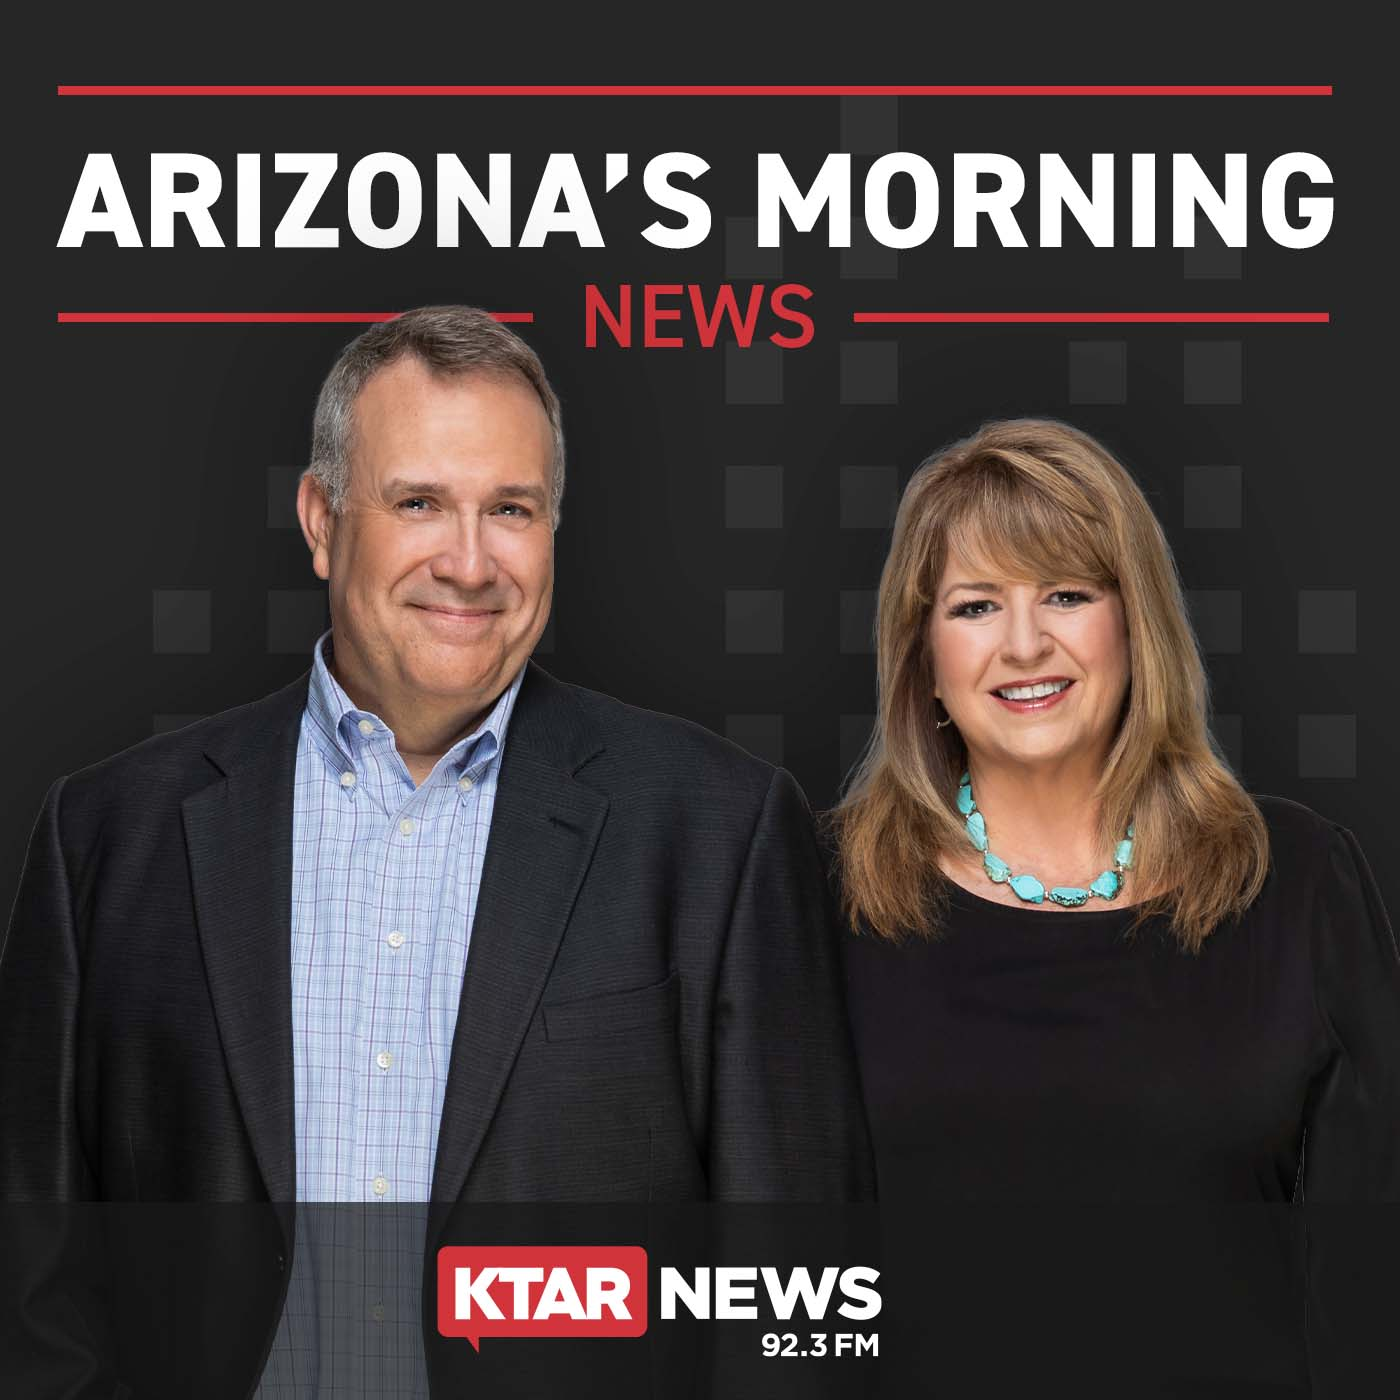 Sharper Point Commentary - Arizona bounces back from coronavirus